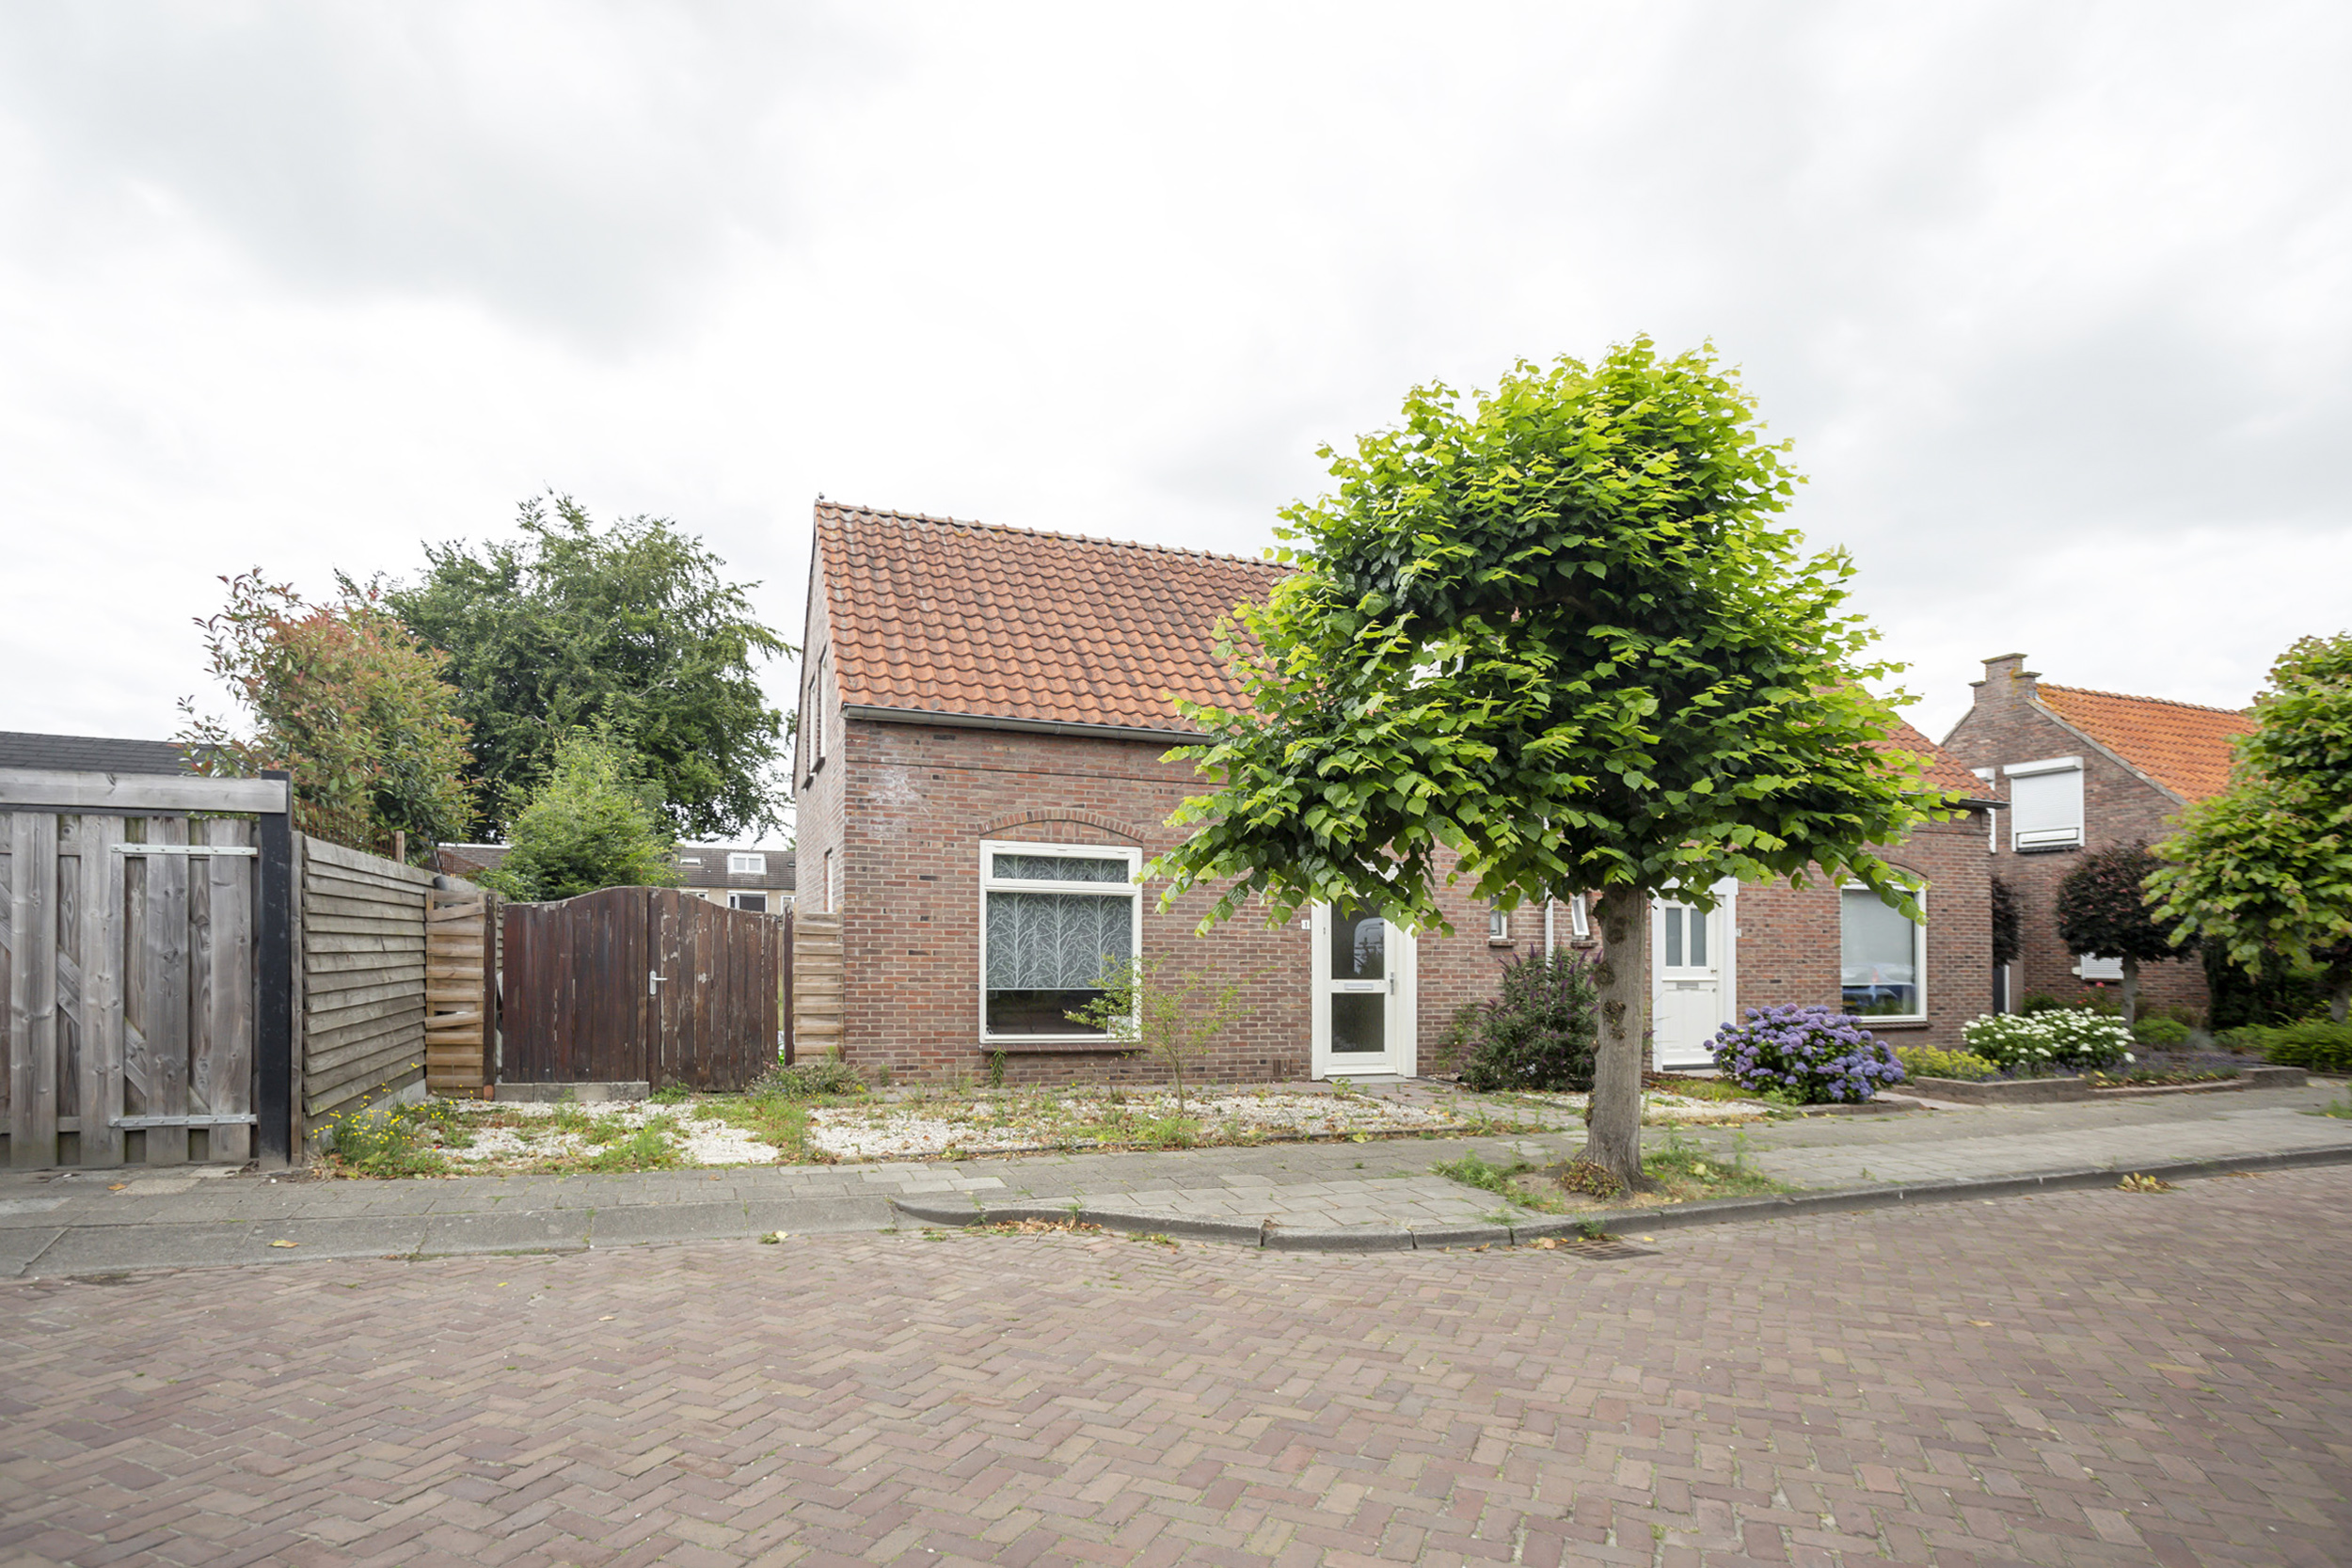 Vinkenstraat 1, 4881 XL Zundert, Nederland